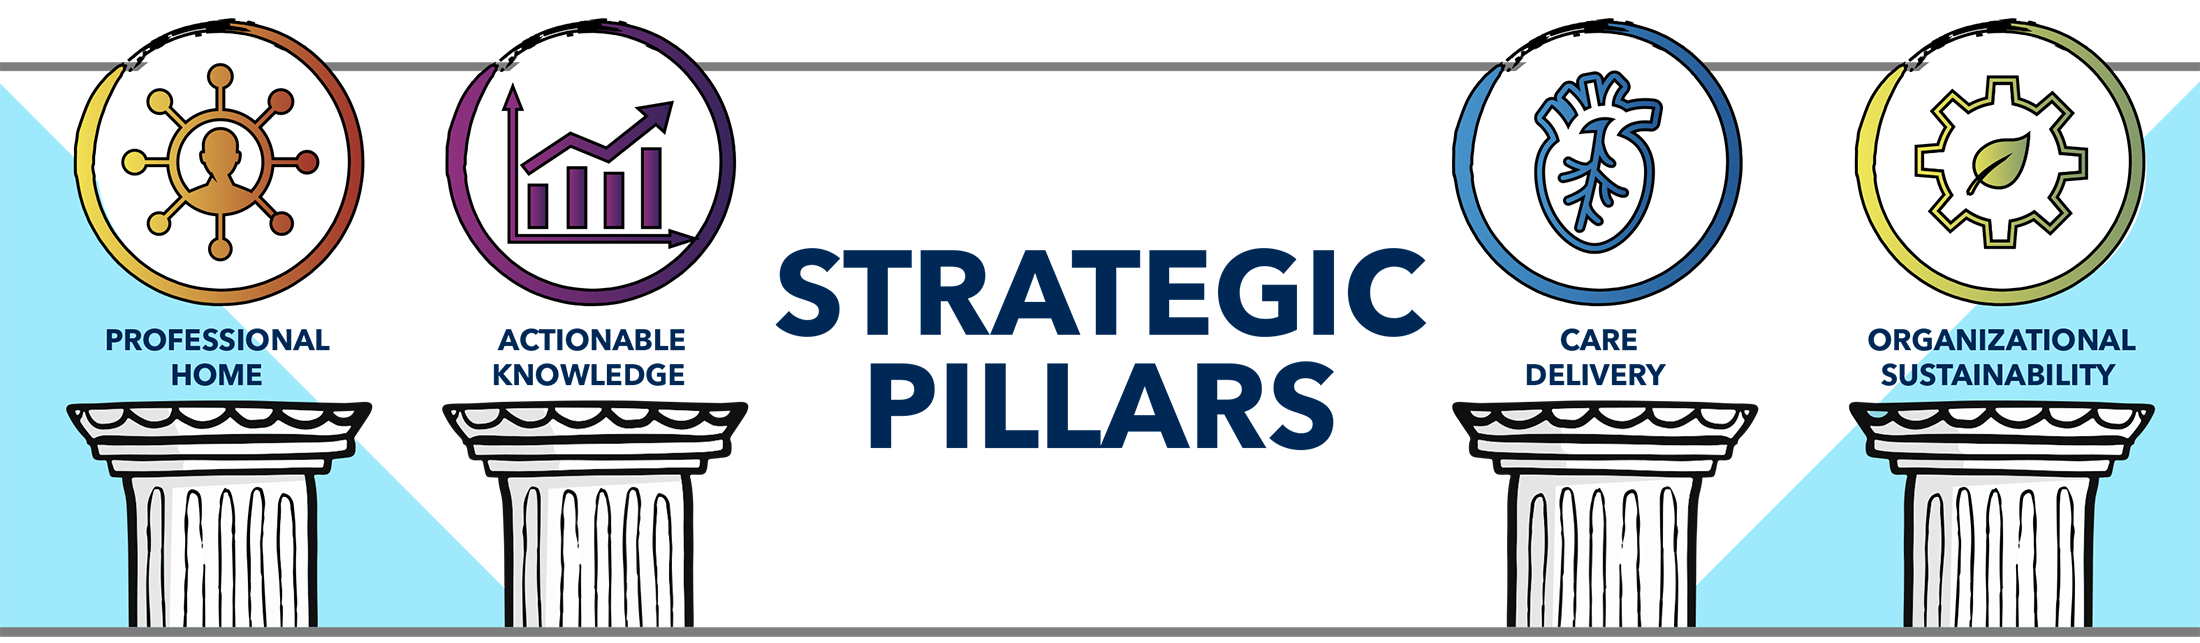 Strategic Pillars